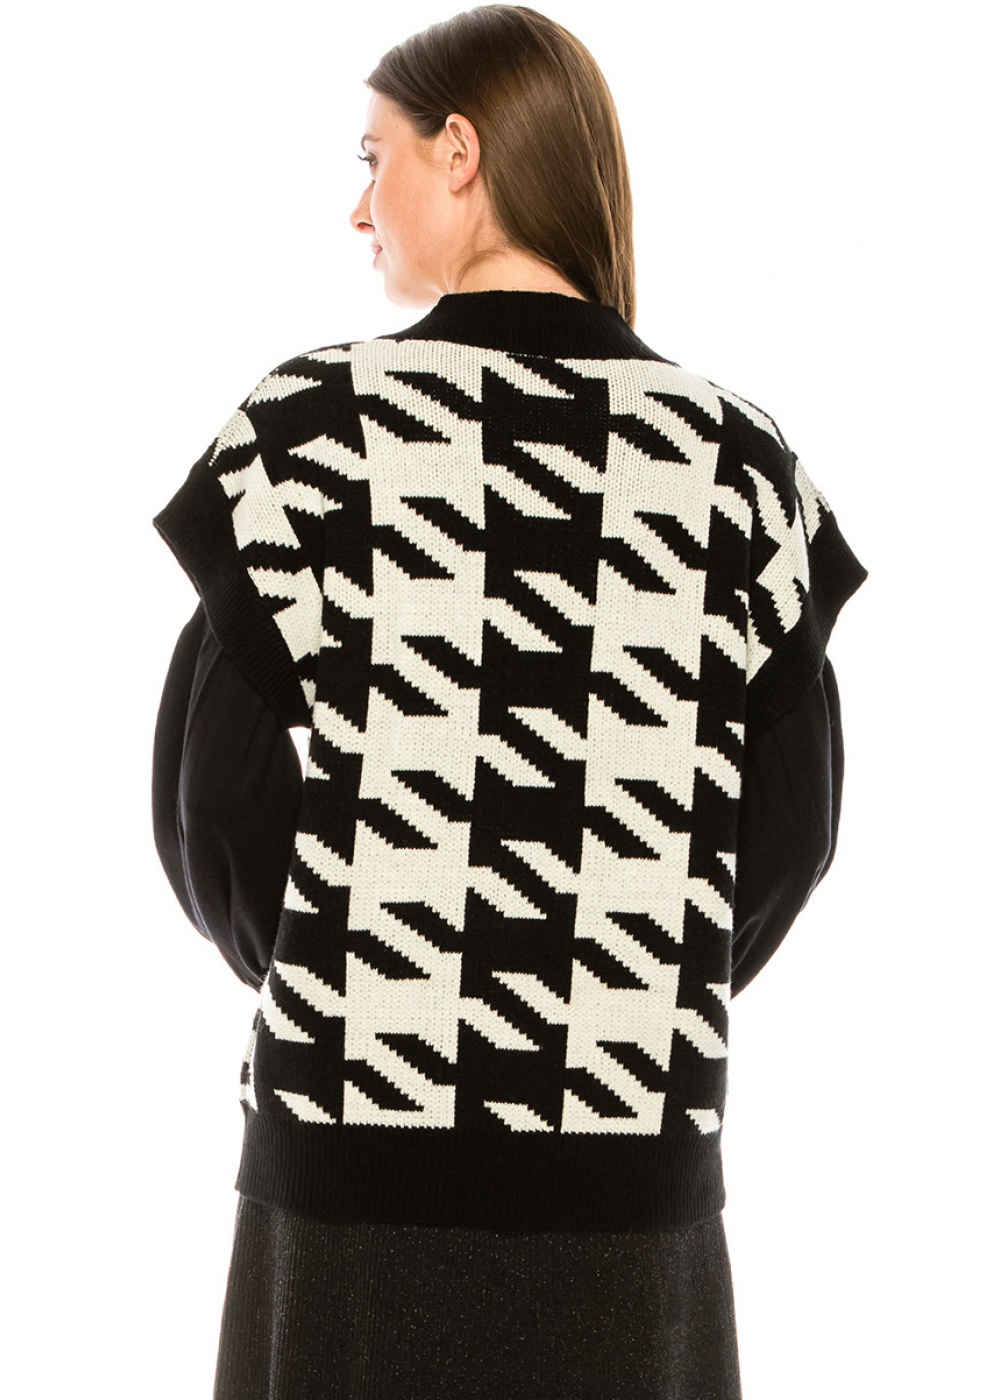 V-neck knitted vest in black